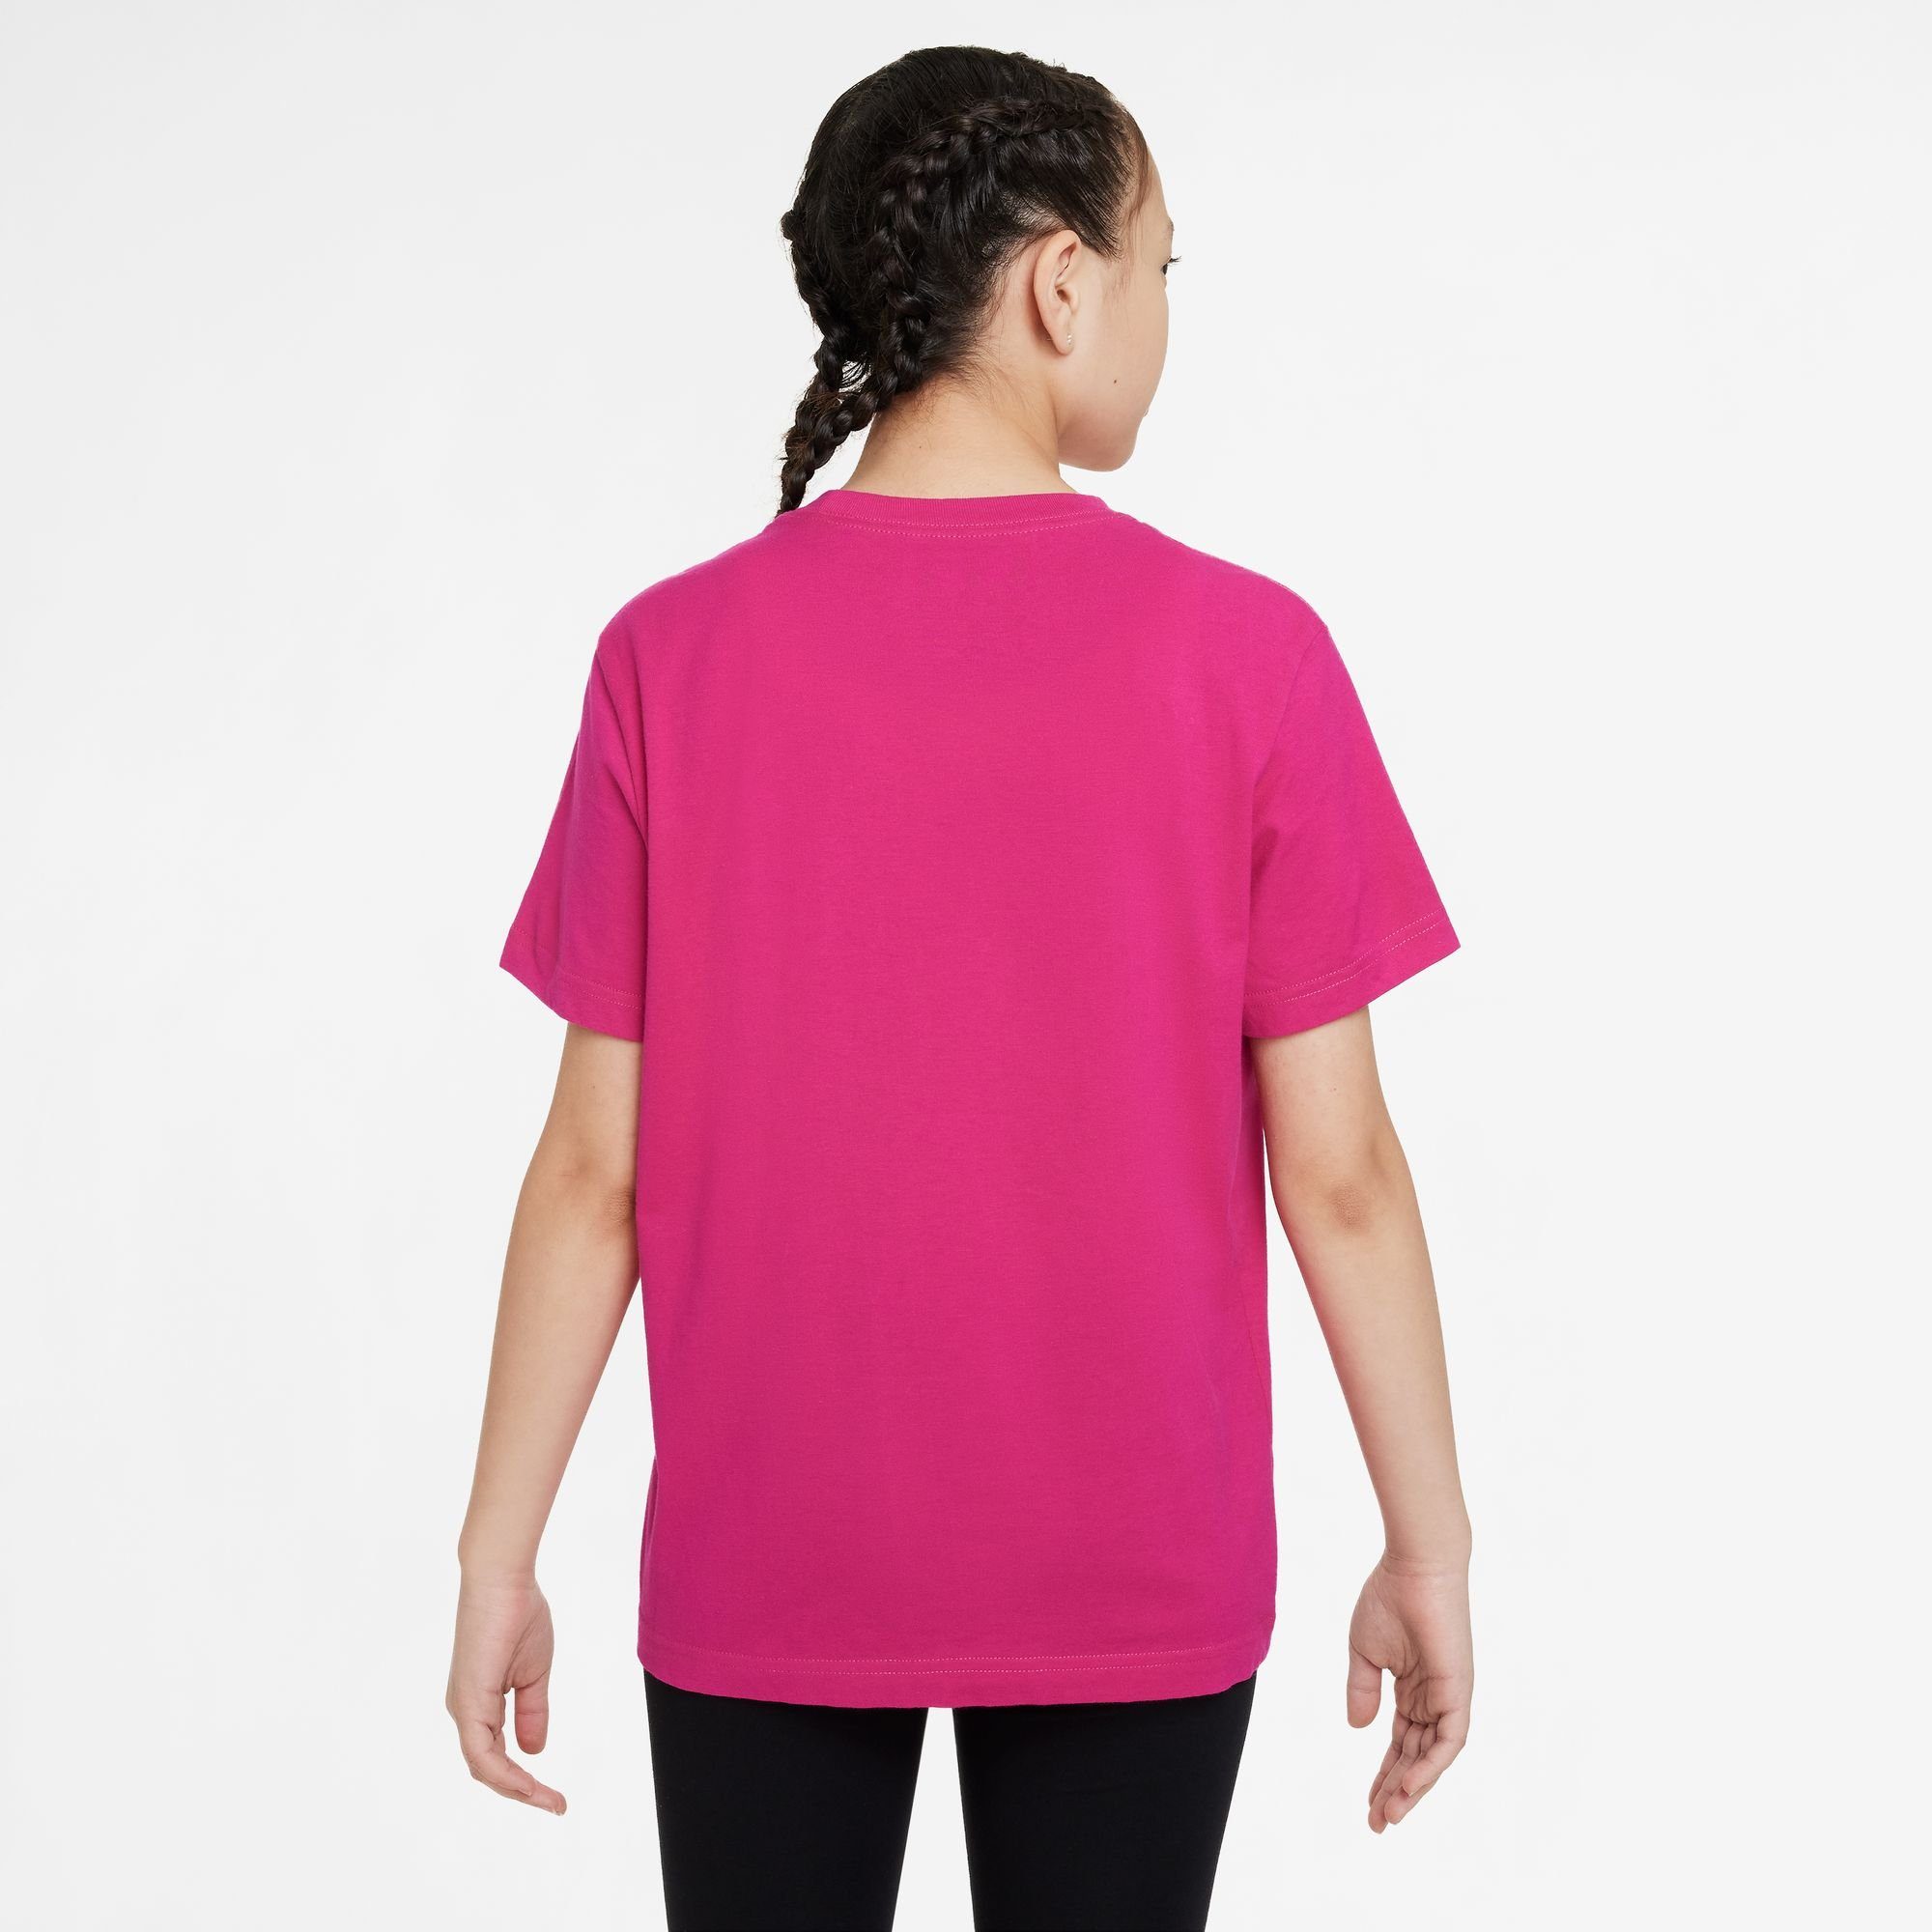 Nike Sportswear (GIRLS) T-SHIRT FIREBERRY KIDS' BIG T-Shirt